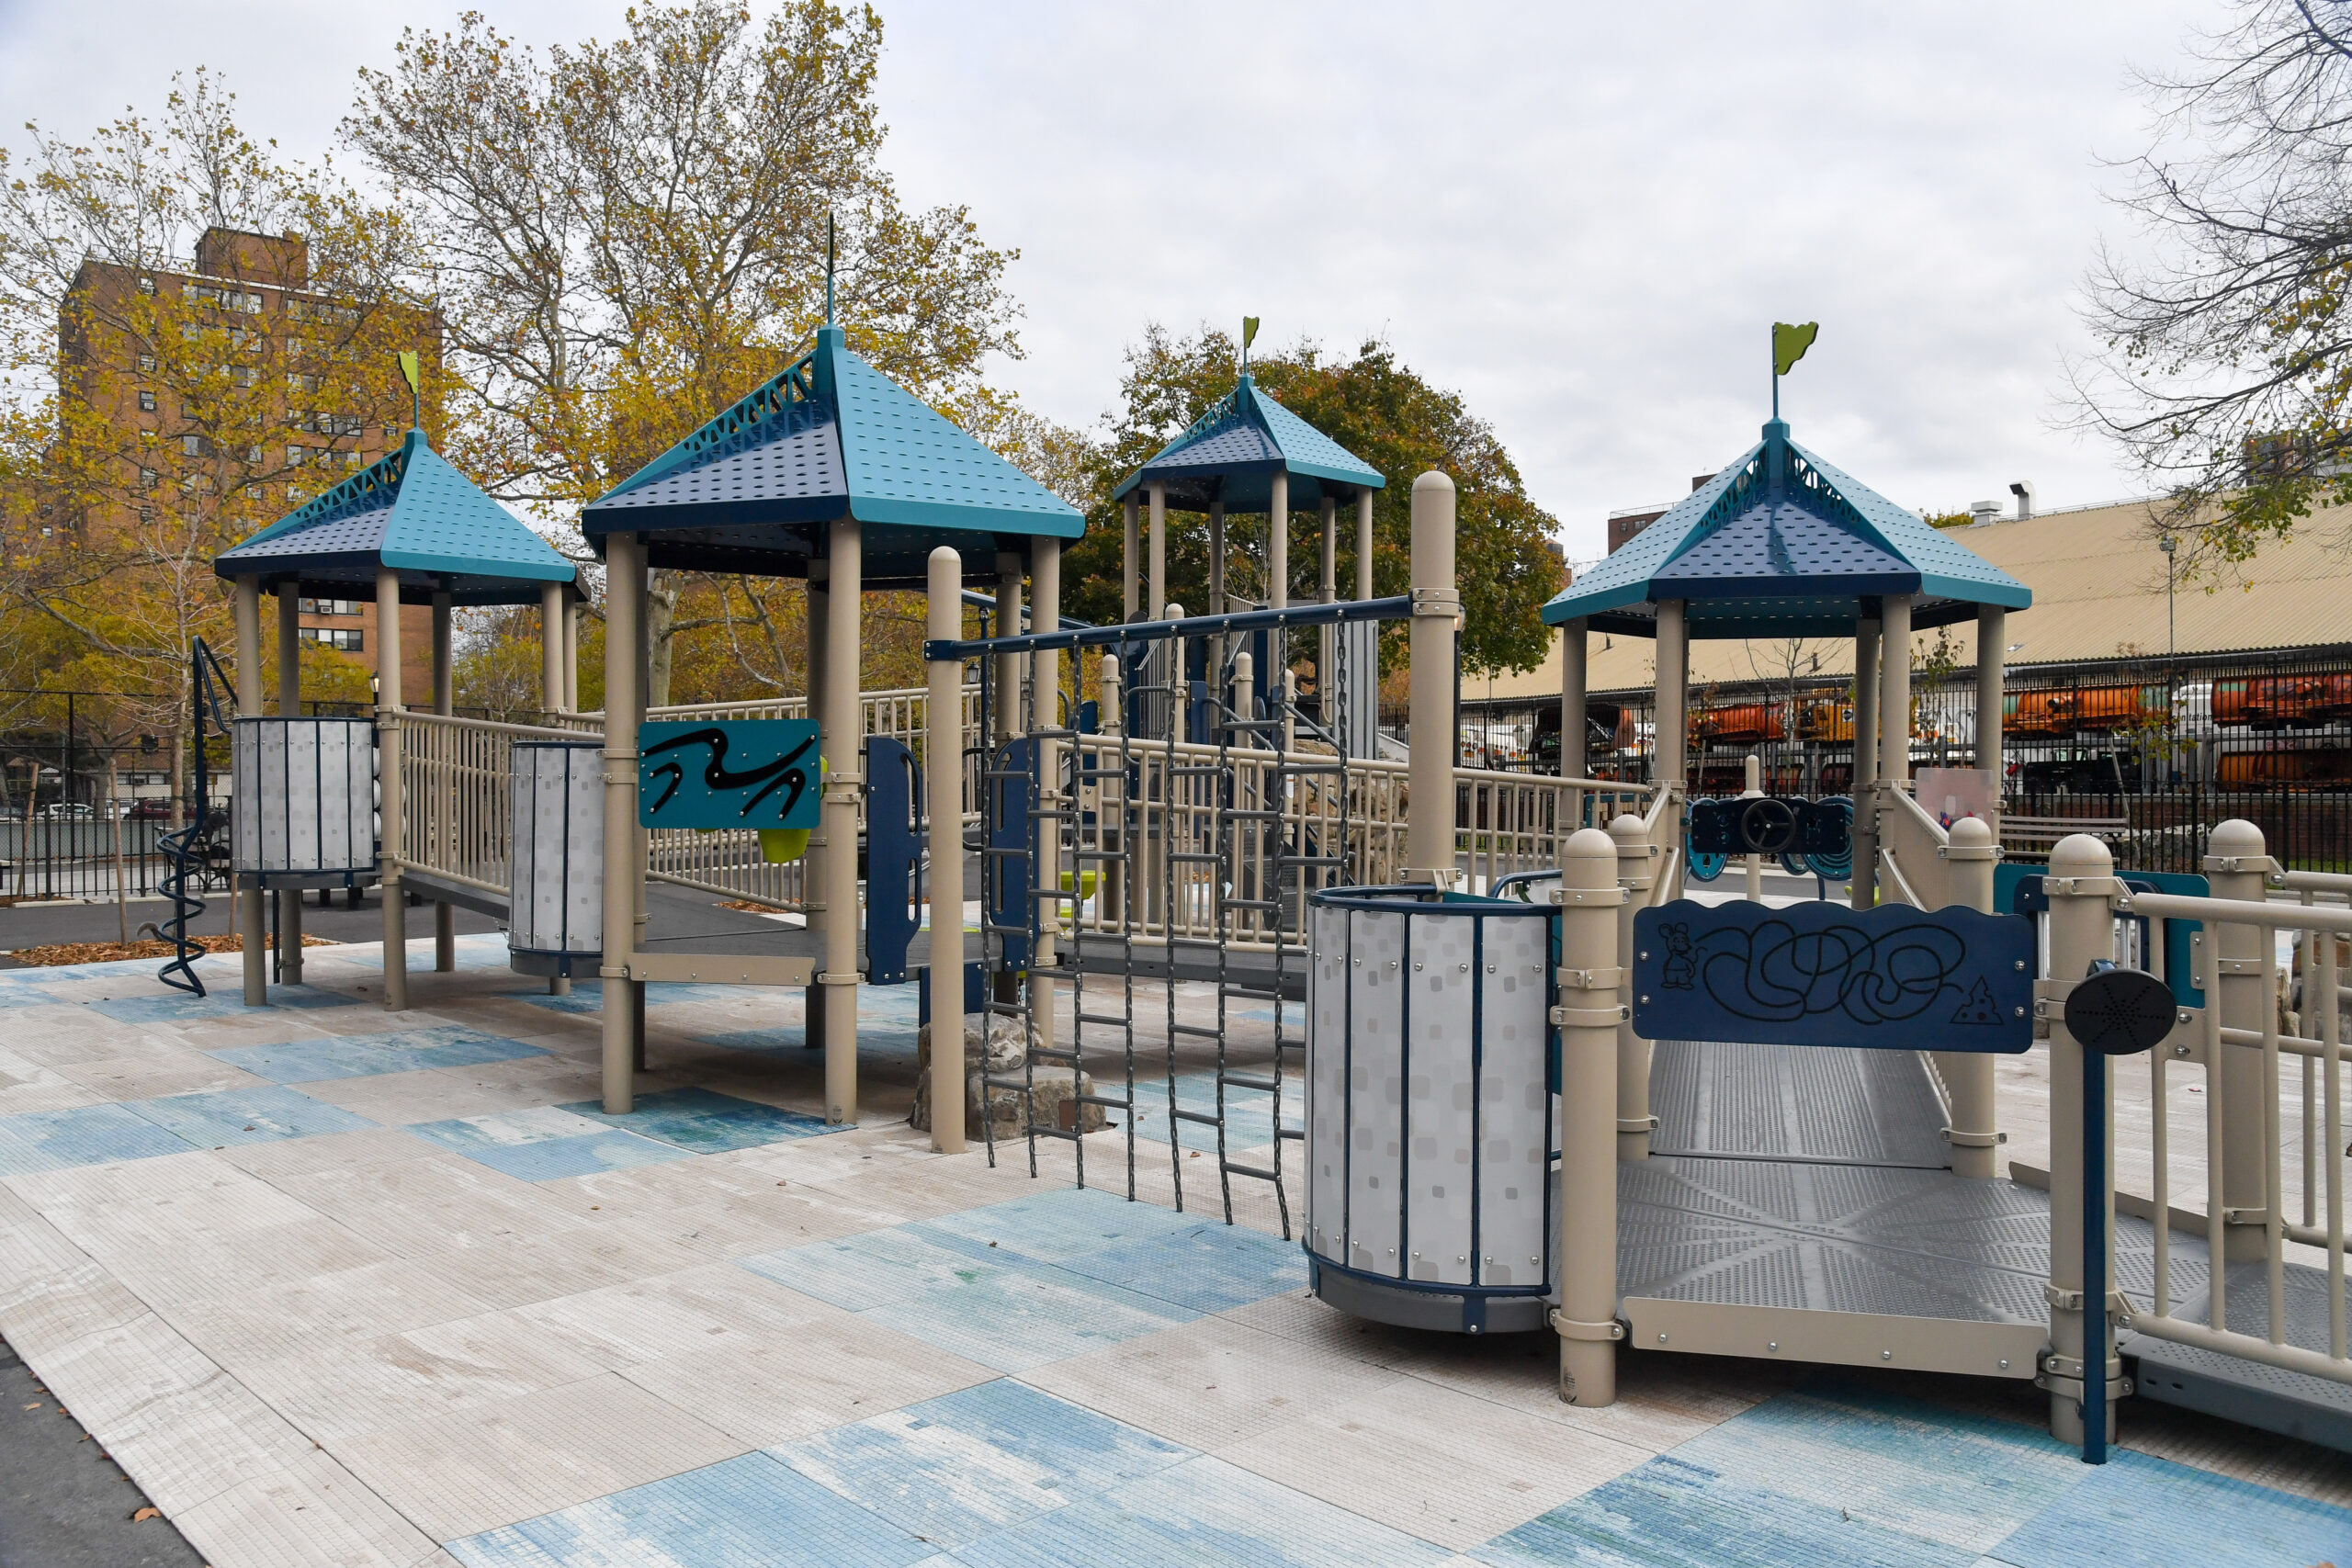 Ravenswood Playground Renovated, $7.1 million in improvements